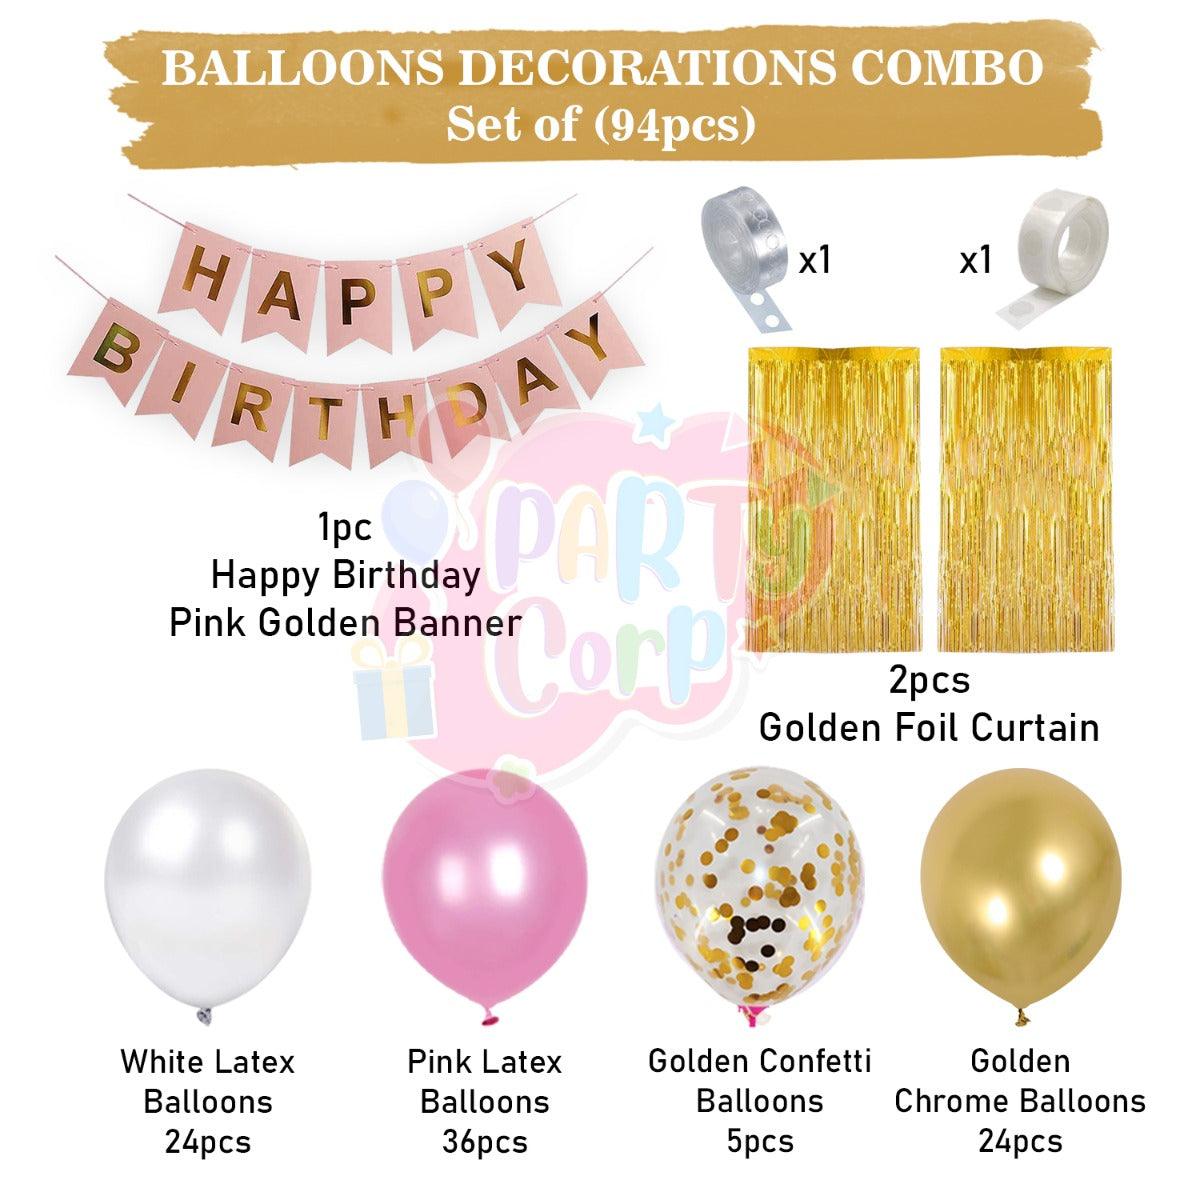 PartyCorp Happy Birthday Decoration Kit Combo 94 Pcs - White, Pink Latex, Gold Chrome & Confetti Balloons, Pink & Gold Happy Birthday Banner, Gold Curtain